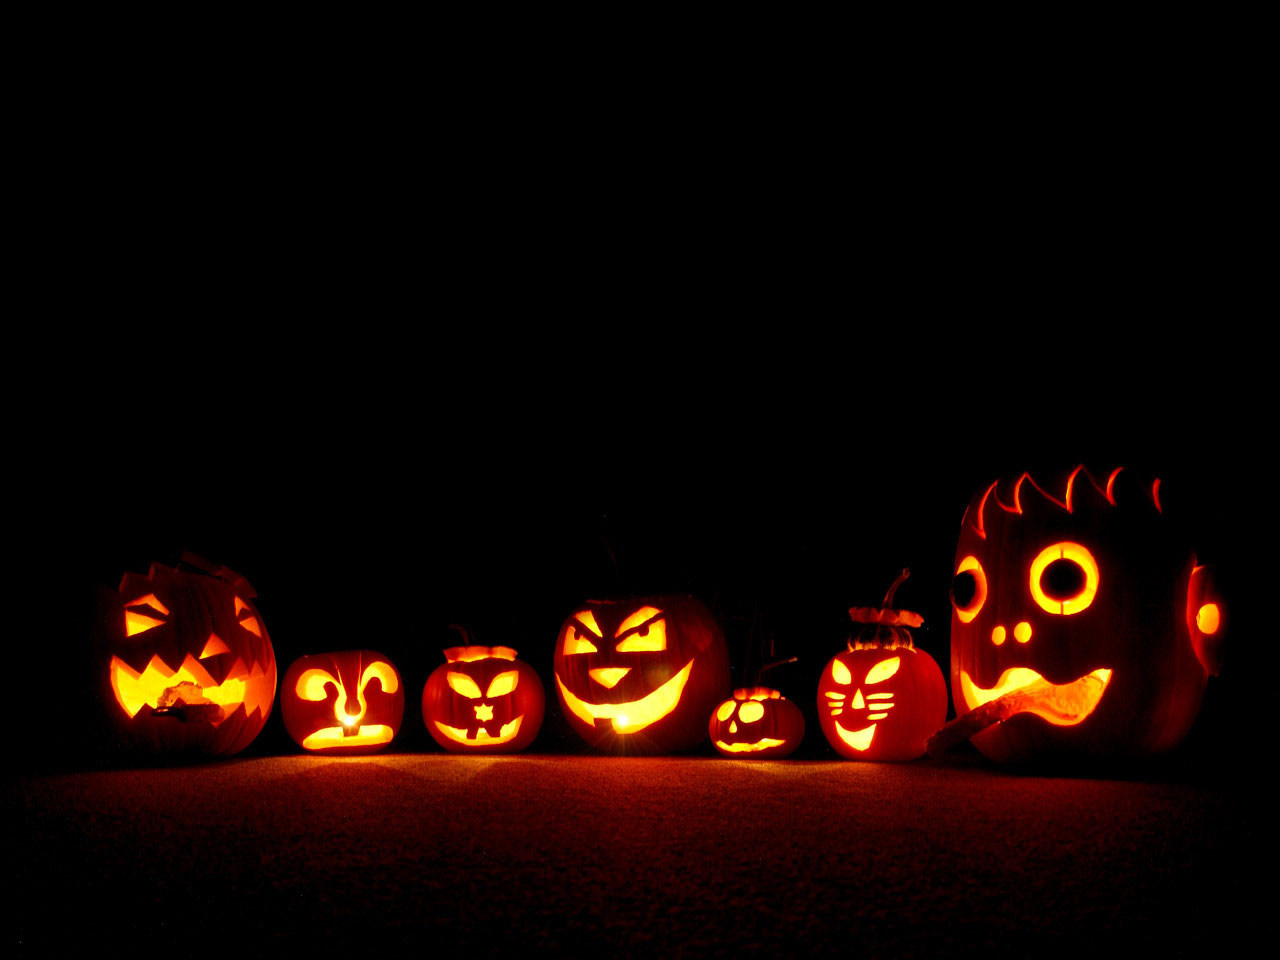 https://blogger.googleusercontent.com/img/b/R29vZ2xl/AVvXsEitZW61HzmNrA8cAzi4r6dxtH7EYuwJNRXWvuEy-UAwtTGhwGoeEg3c7dmq7IQhvSuaQHIpPw9UO5eJCqf611xEeTs1PRDv1zNQRFjR8pvnzvhf8k4mFEnuKFi2noB8ZOn5Rbul6E40rCE/s1600/Happy+Halloween+%25252813%252529.jpg